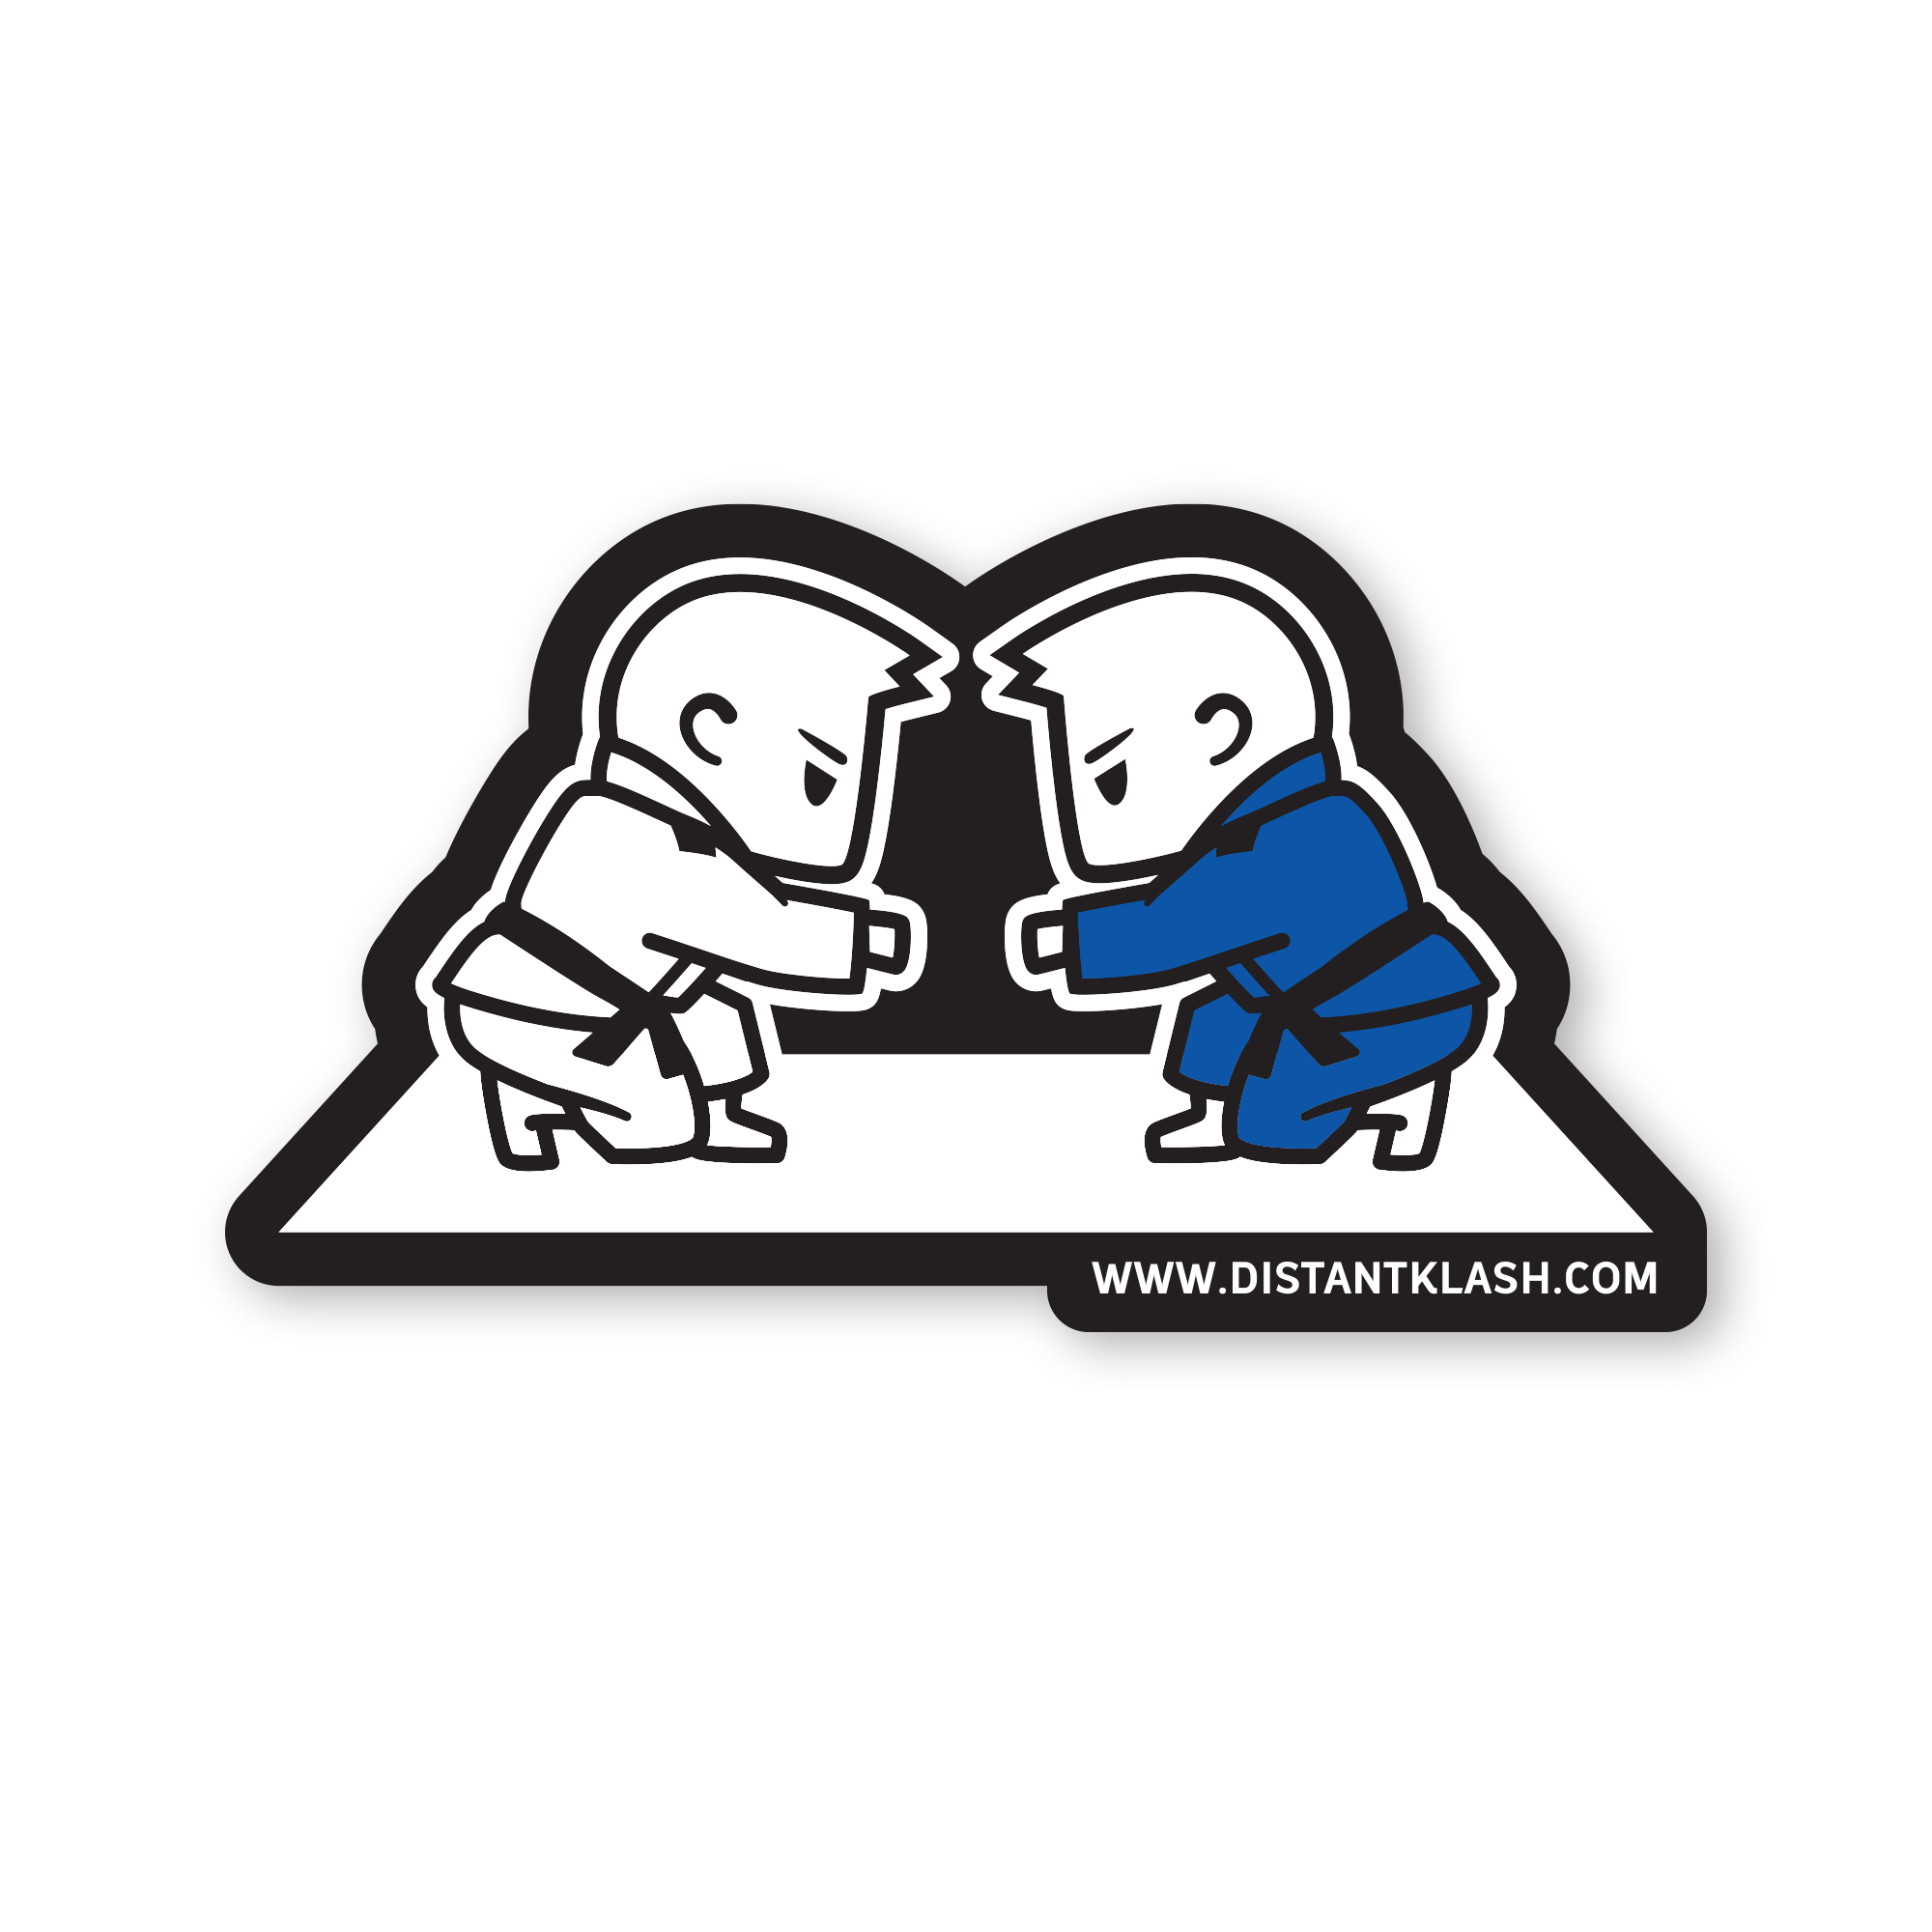 Boys Fist Bump Sticker - Black, Blue